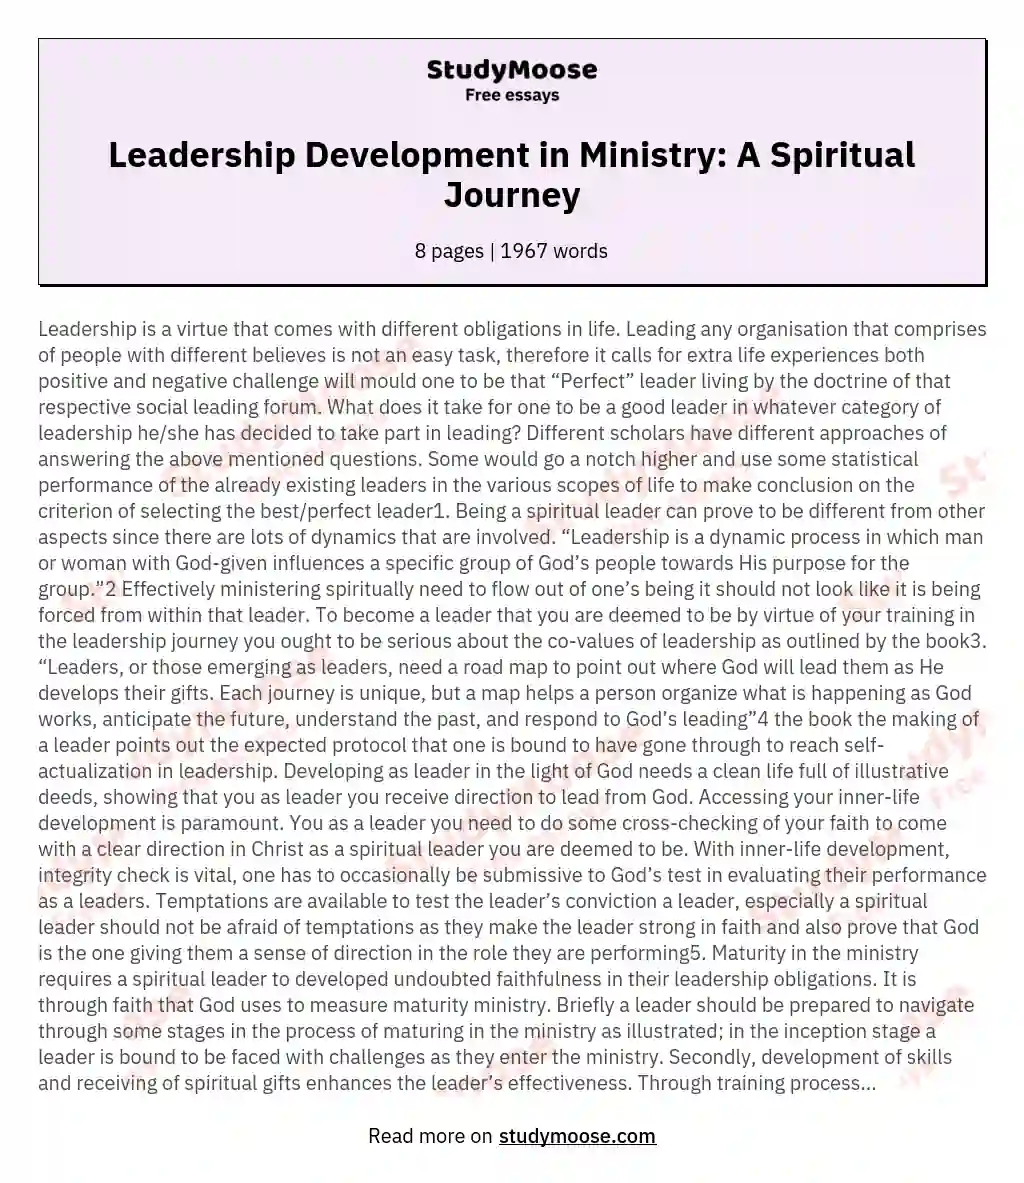 Leadership Development in Ministry: A Spiritual Journey essay